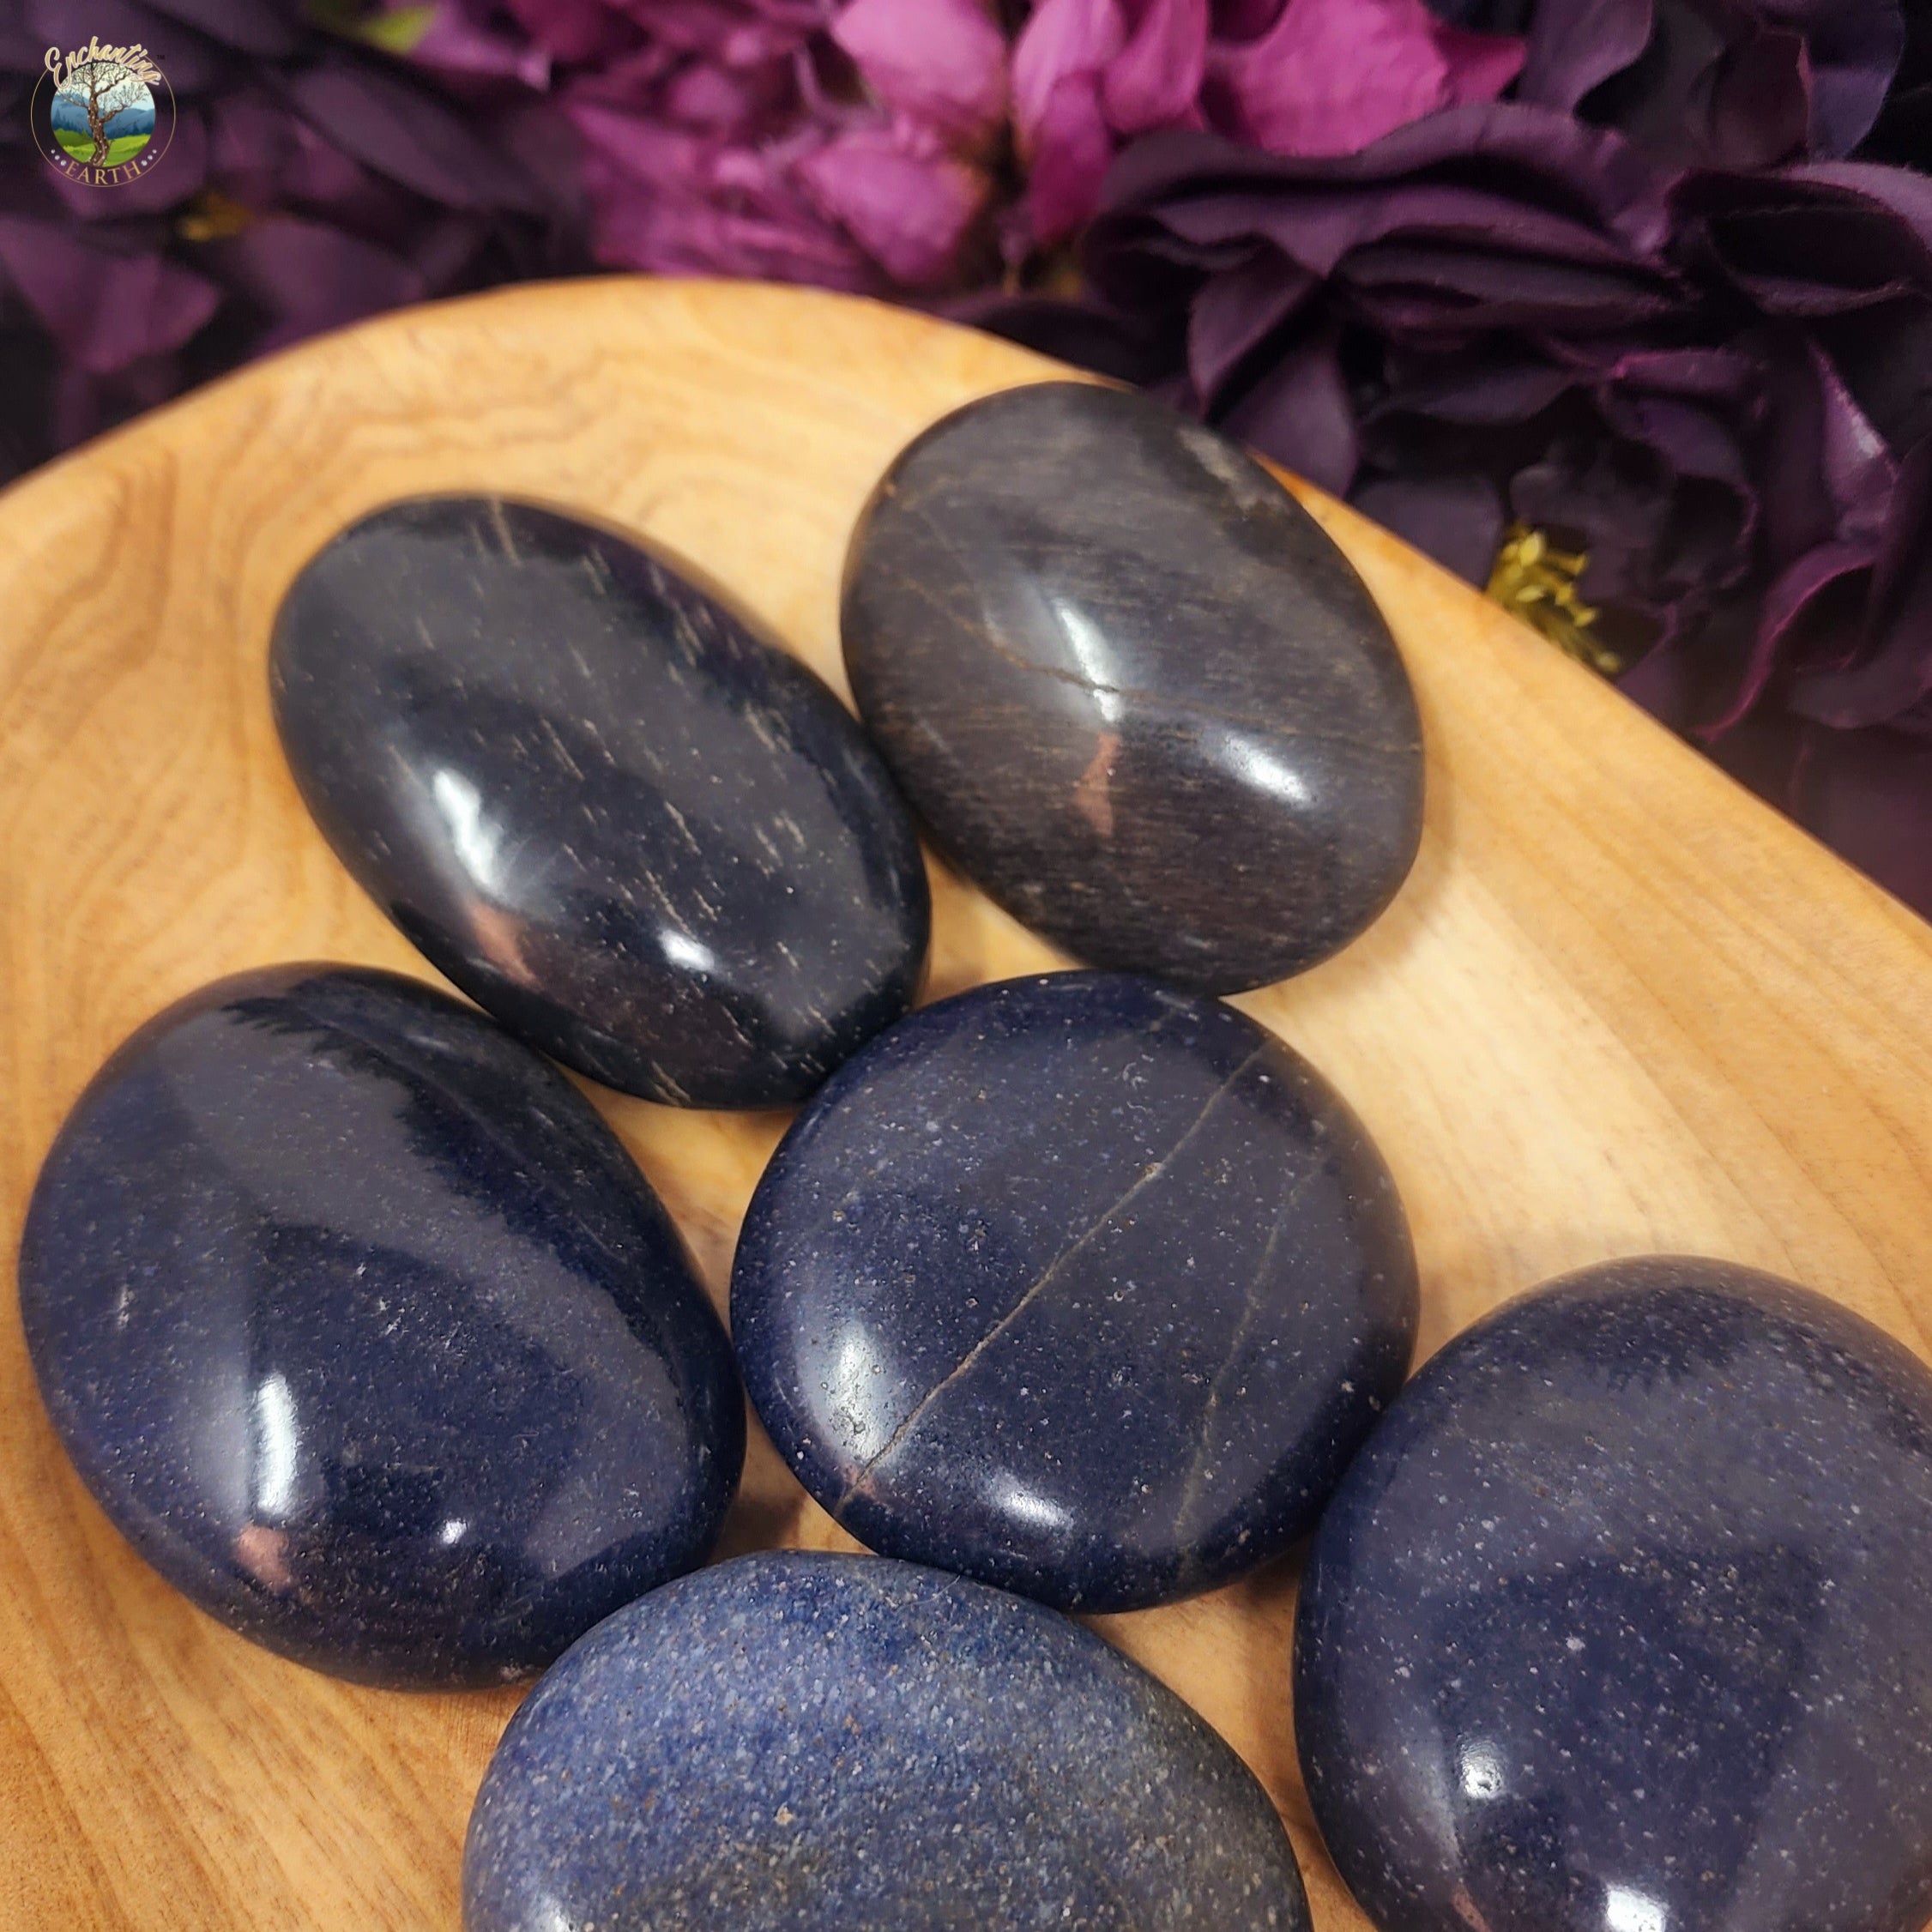 Lazulite Palm Stone for Manifesting through Visualization